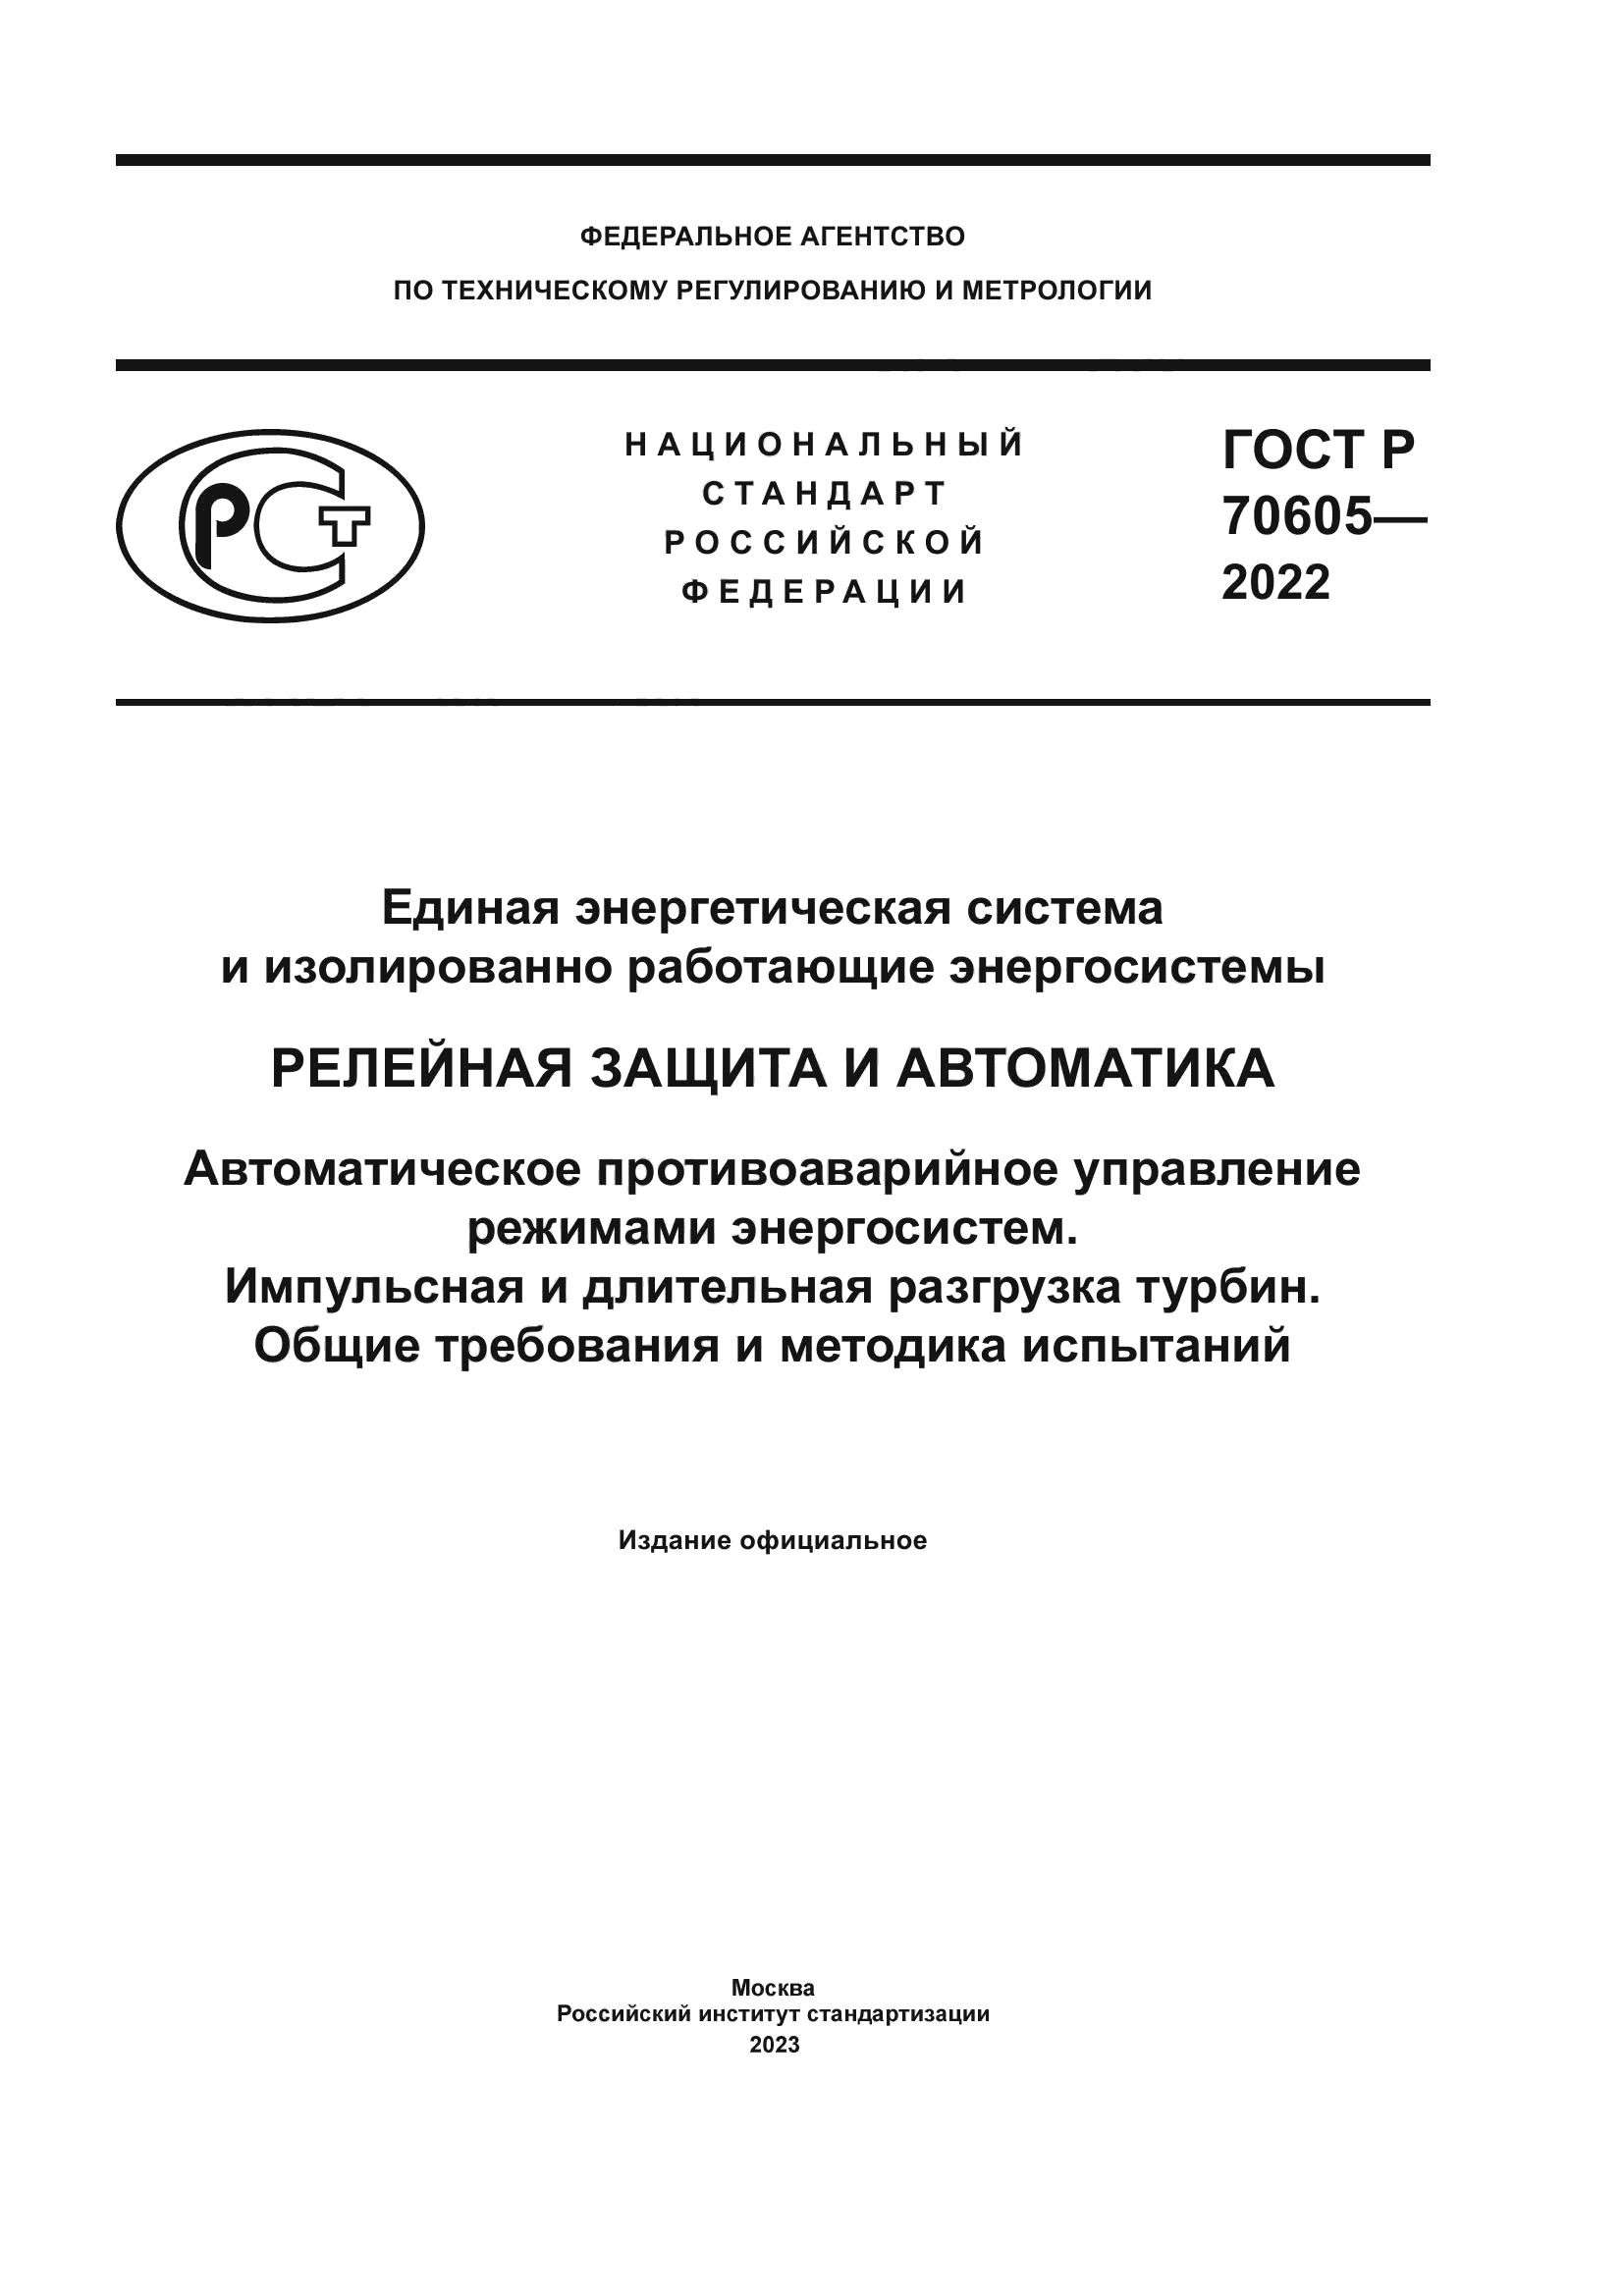 ГОСТ Р 70605-2022